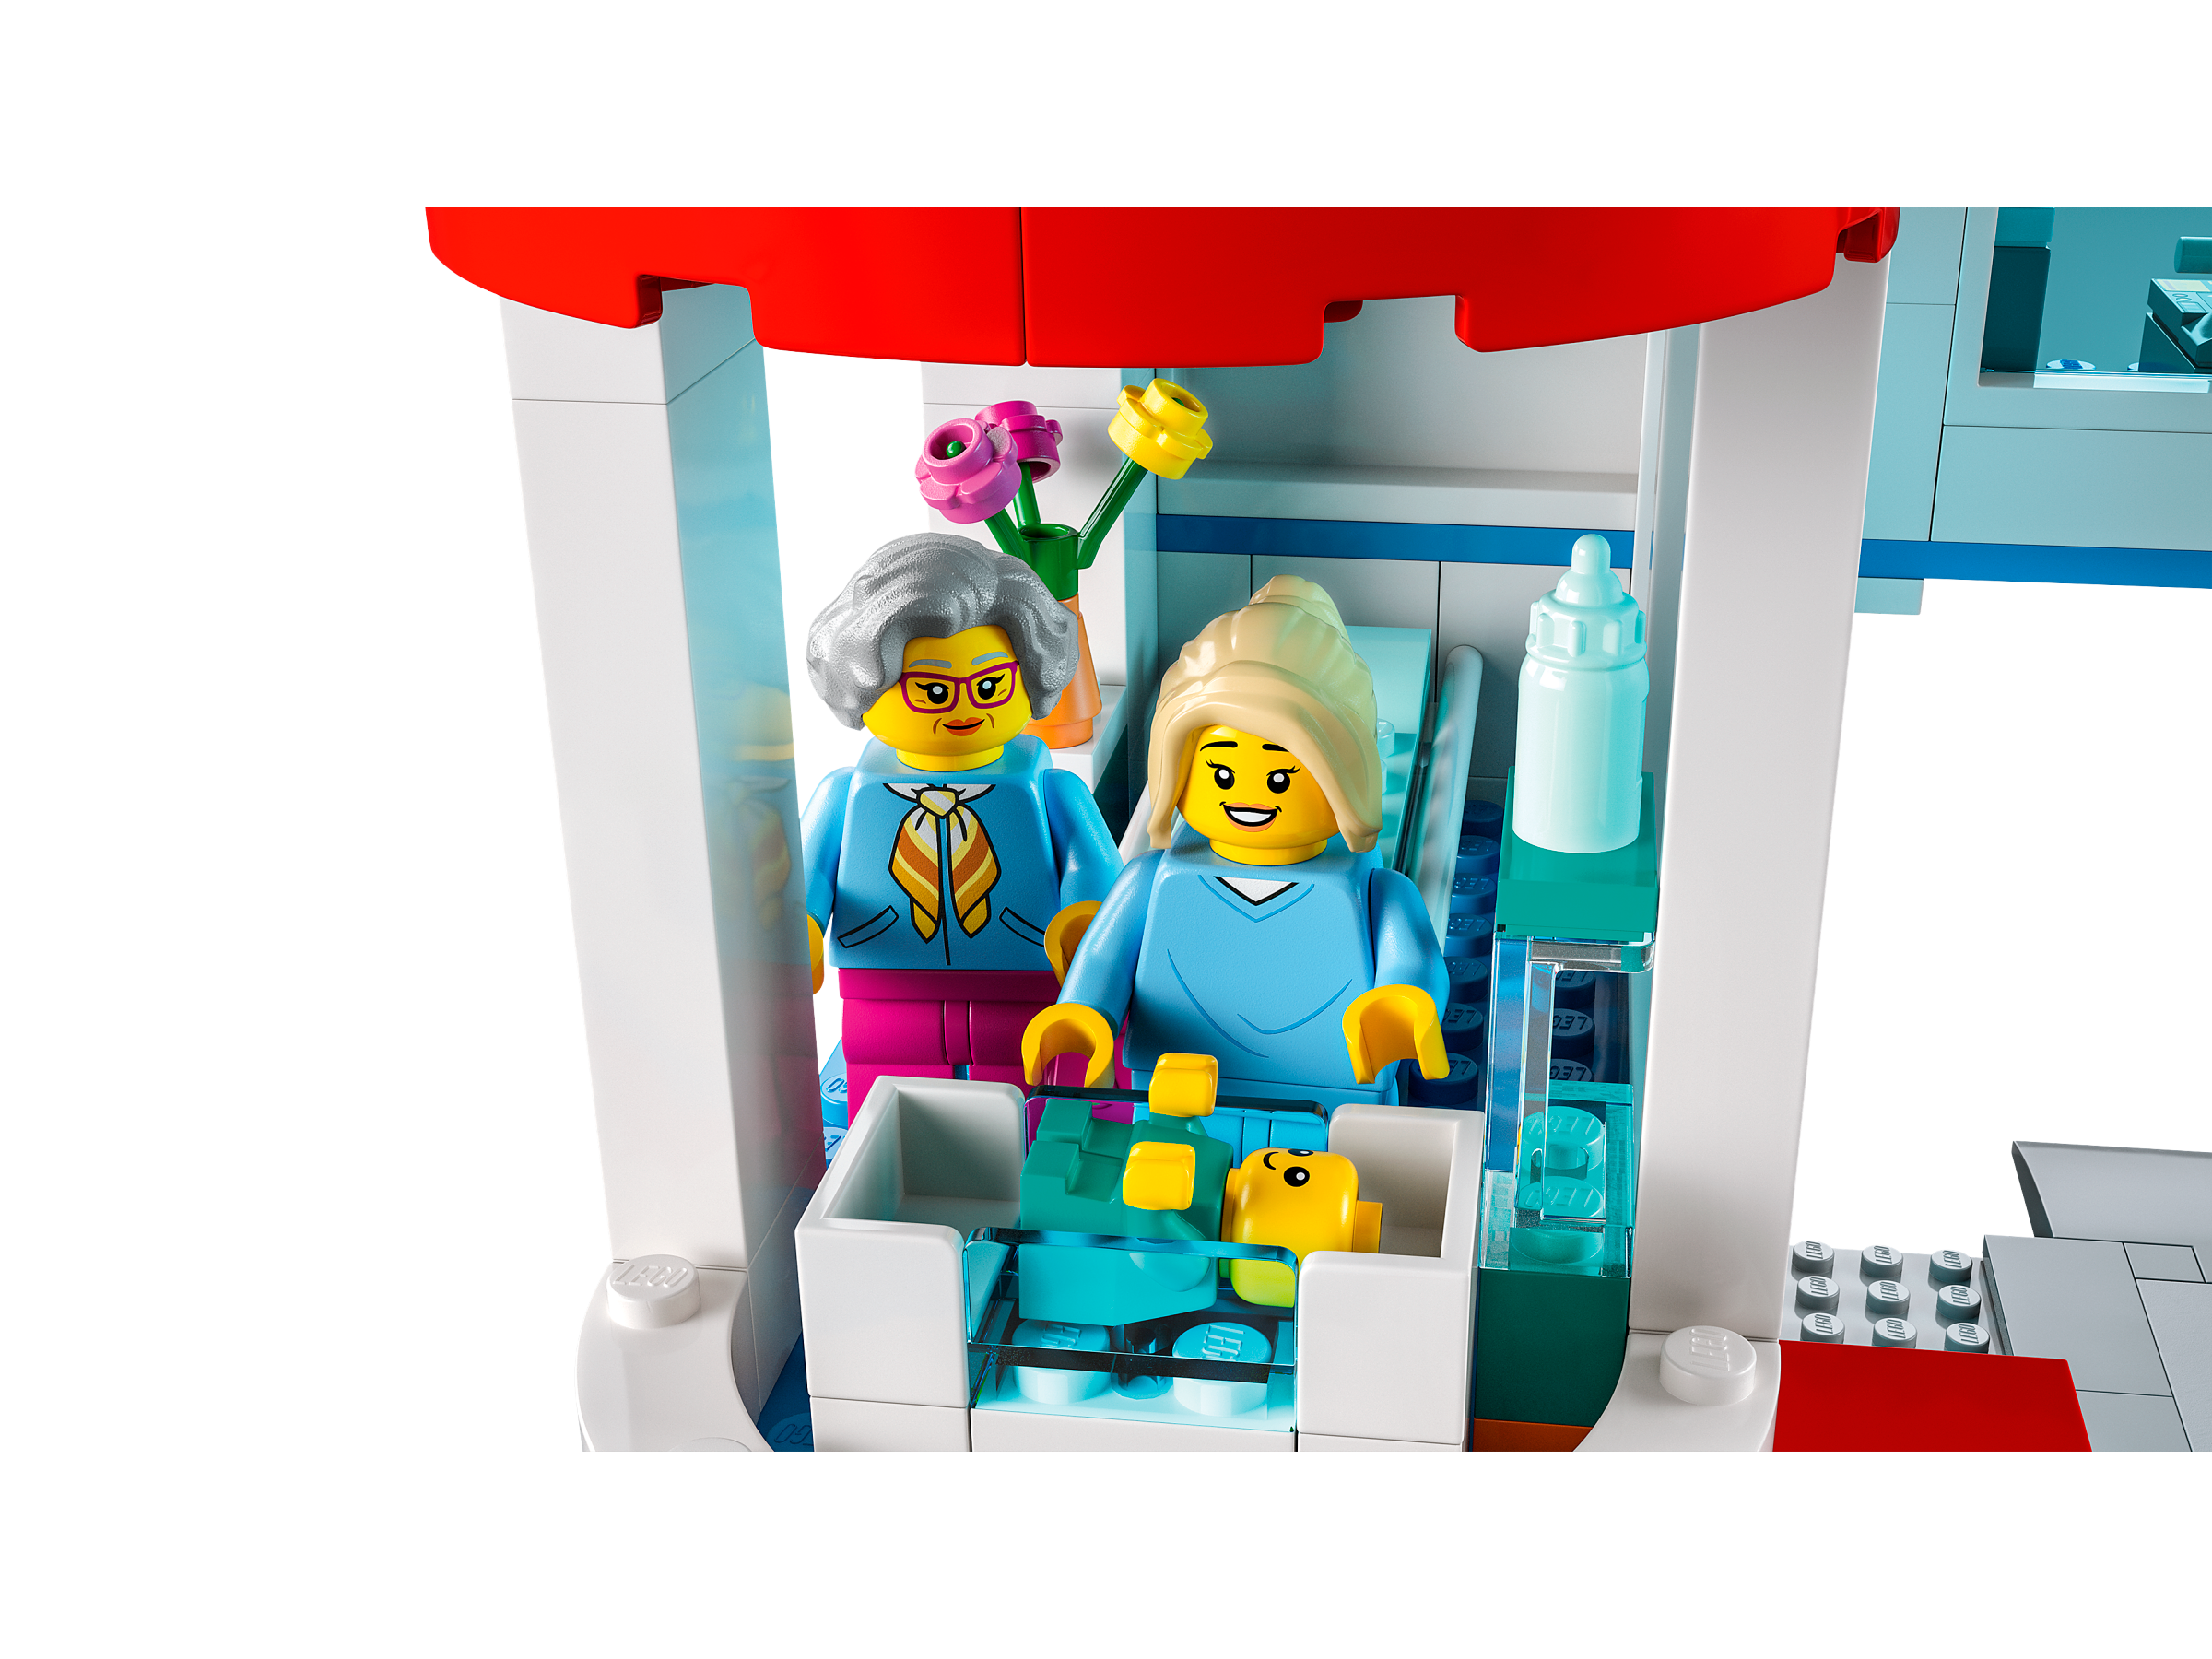 LEGO City Hospital Set 60330 - SS22 - US